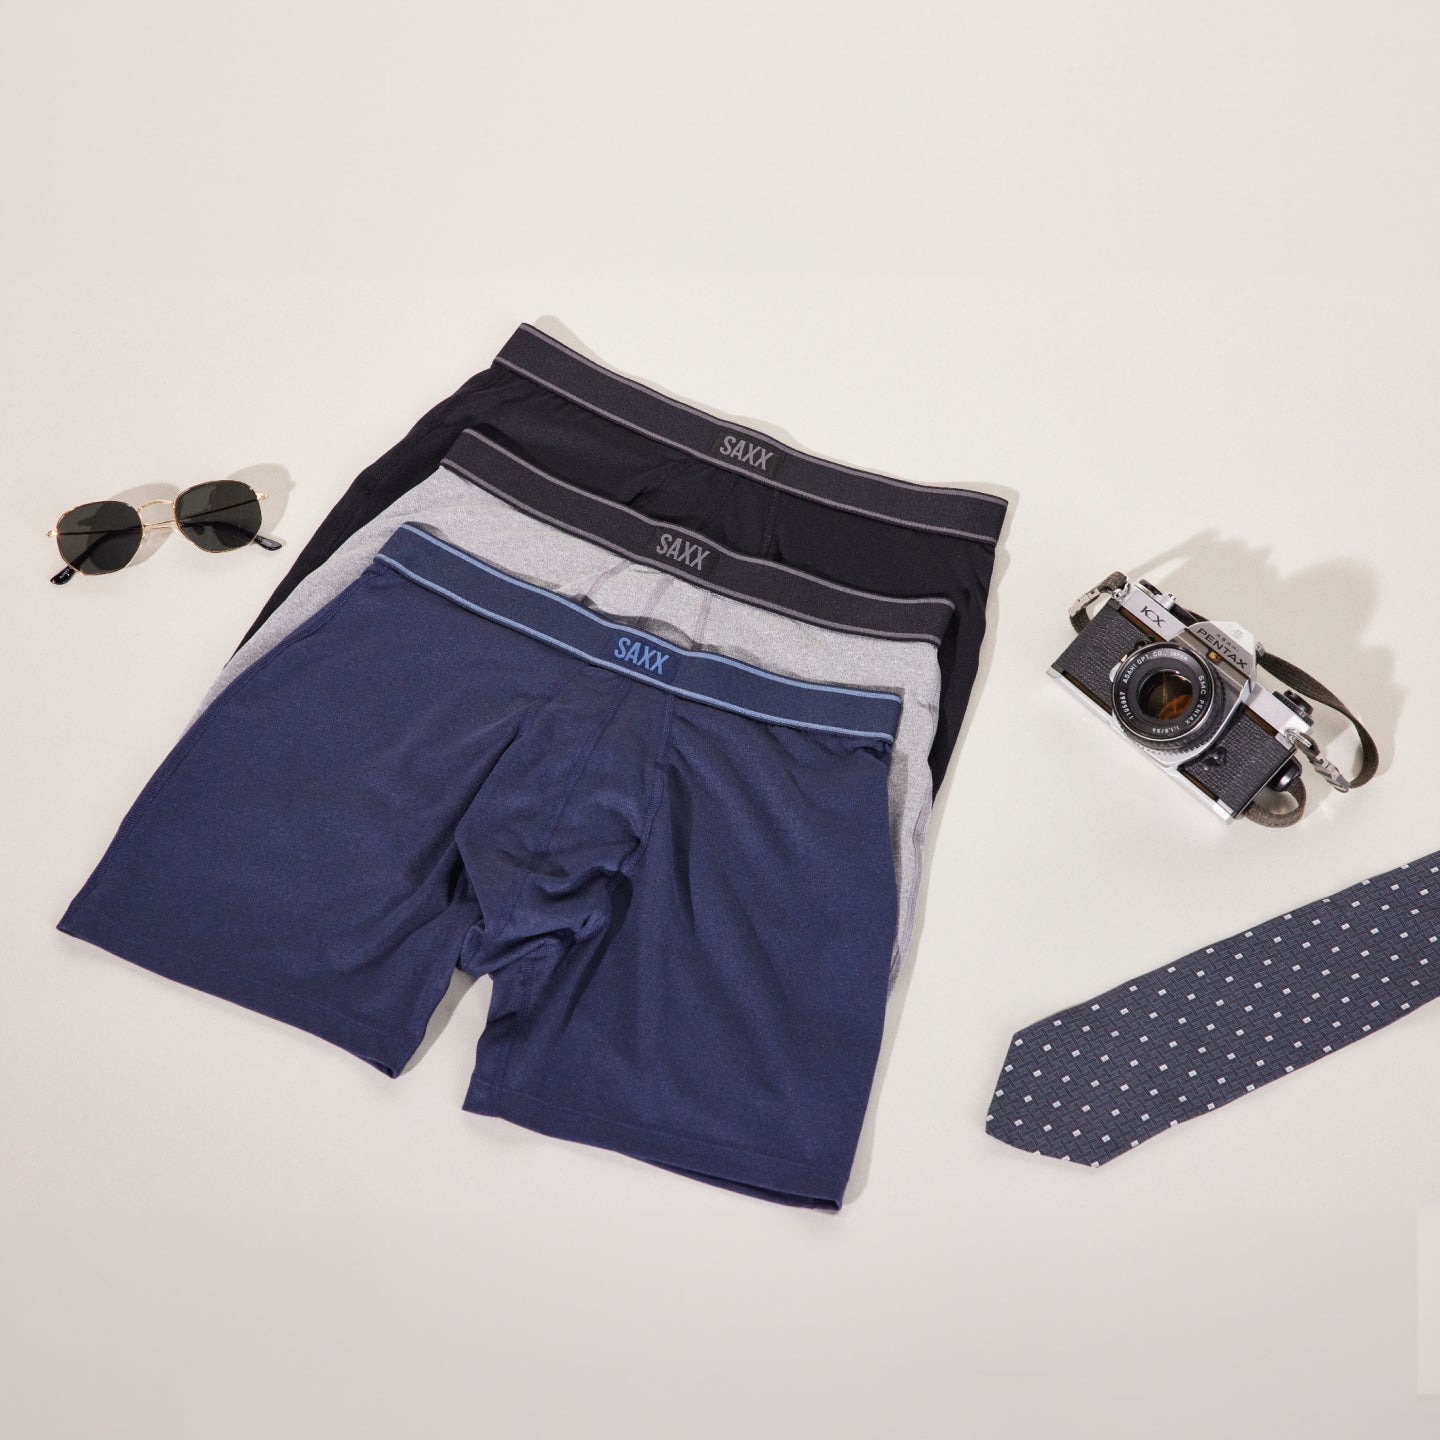 Three pairs of underwear resting beside sunglasses, camera, and necktie